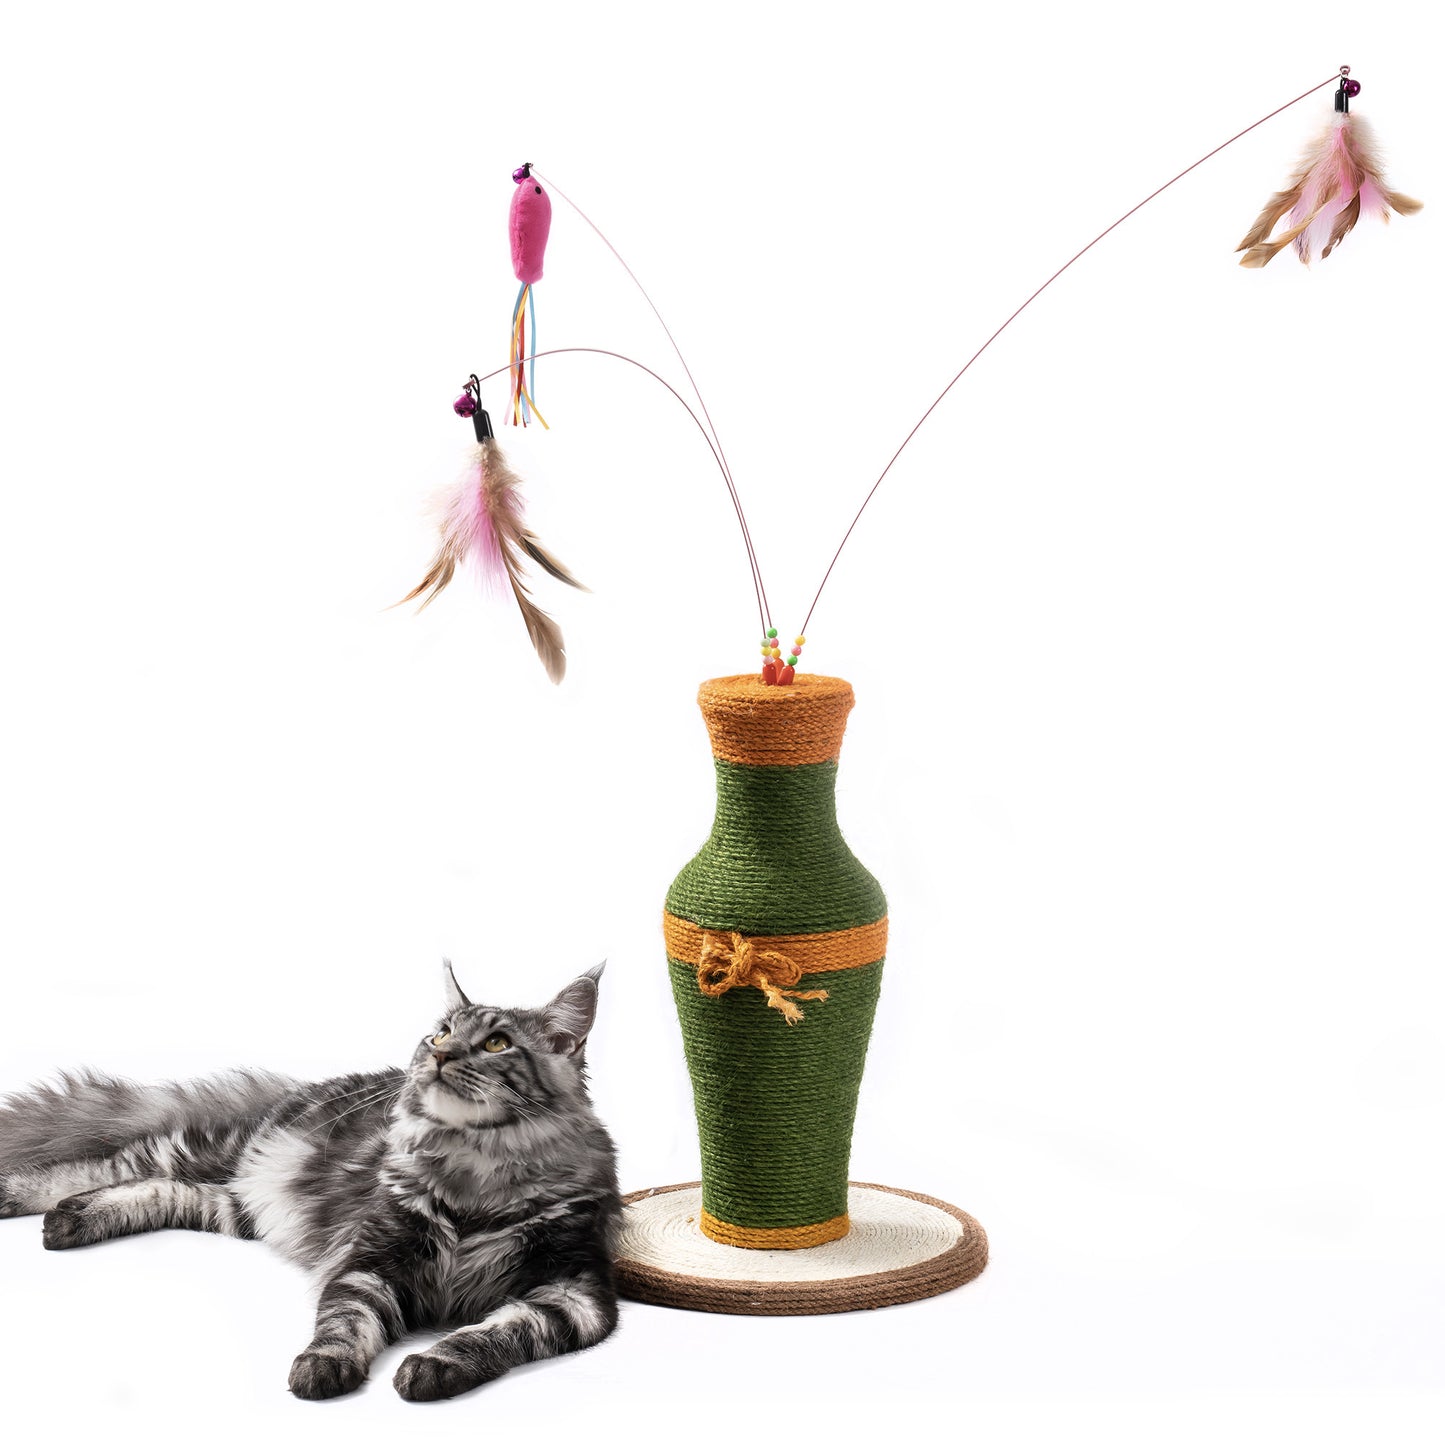 MewooFun Cotton and Linen Vase-Shaped Cat Toys Interactive Toys Cat Gift Kitten